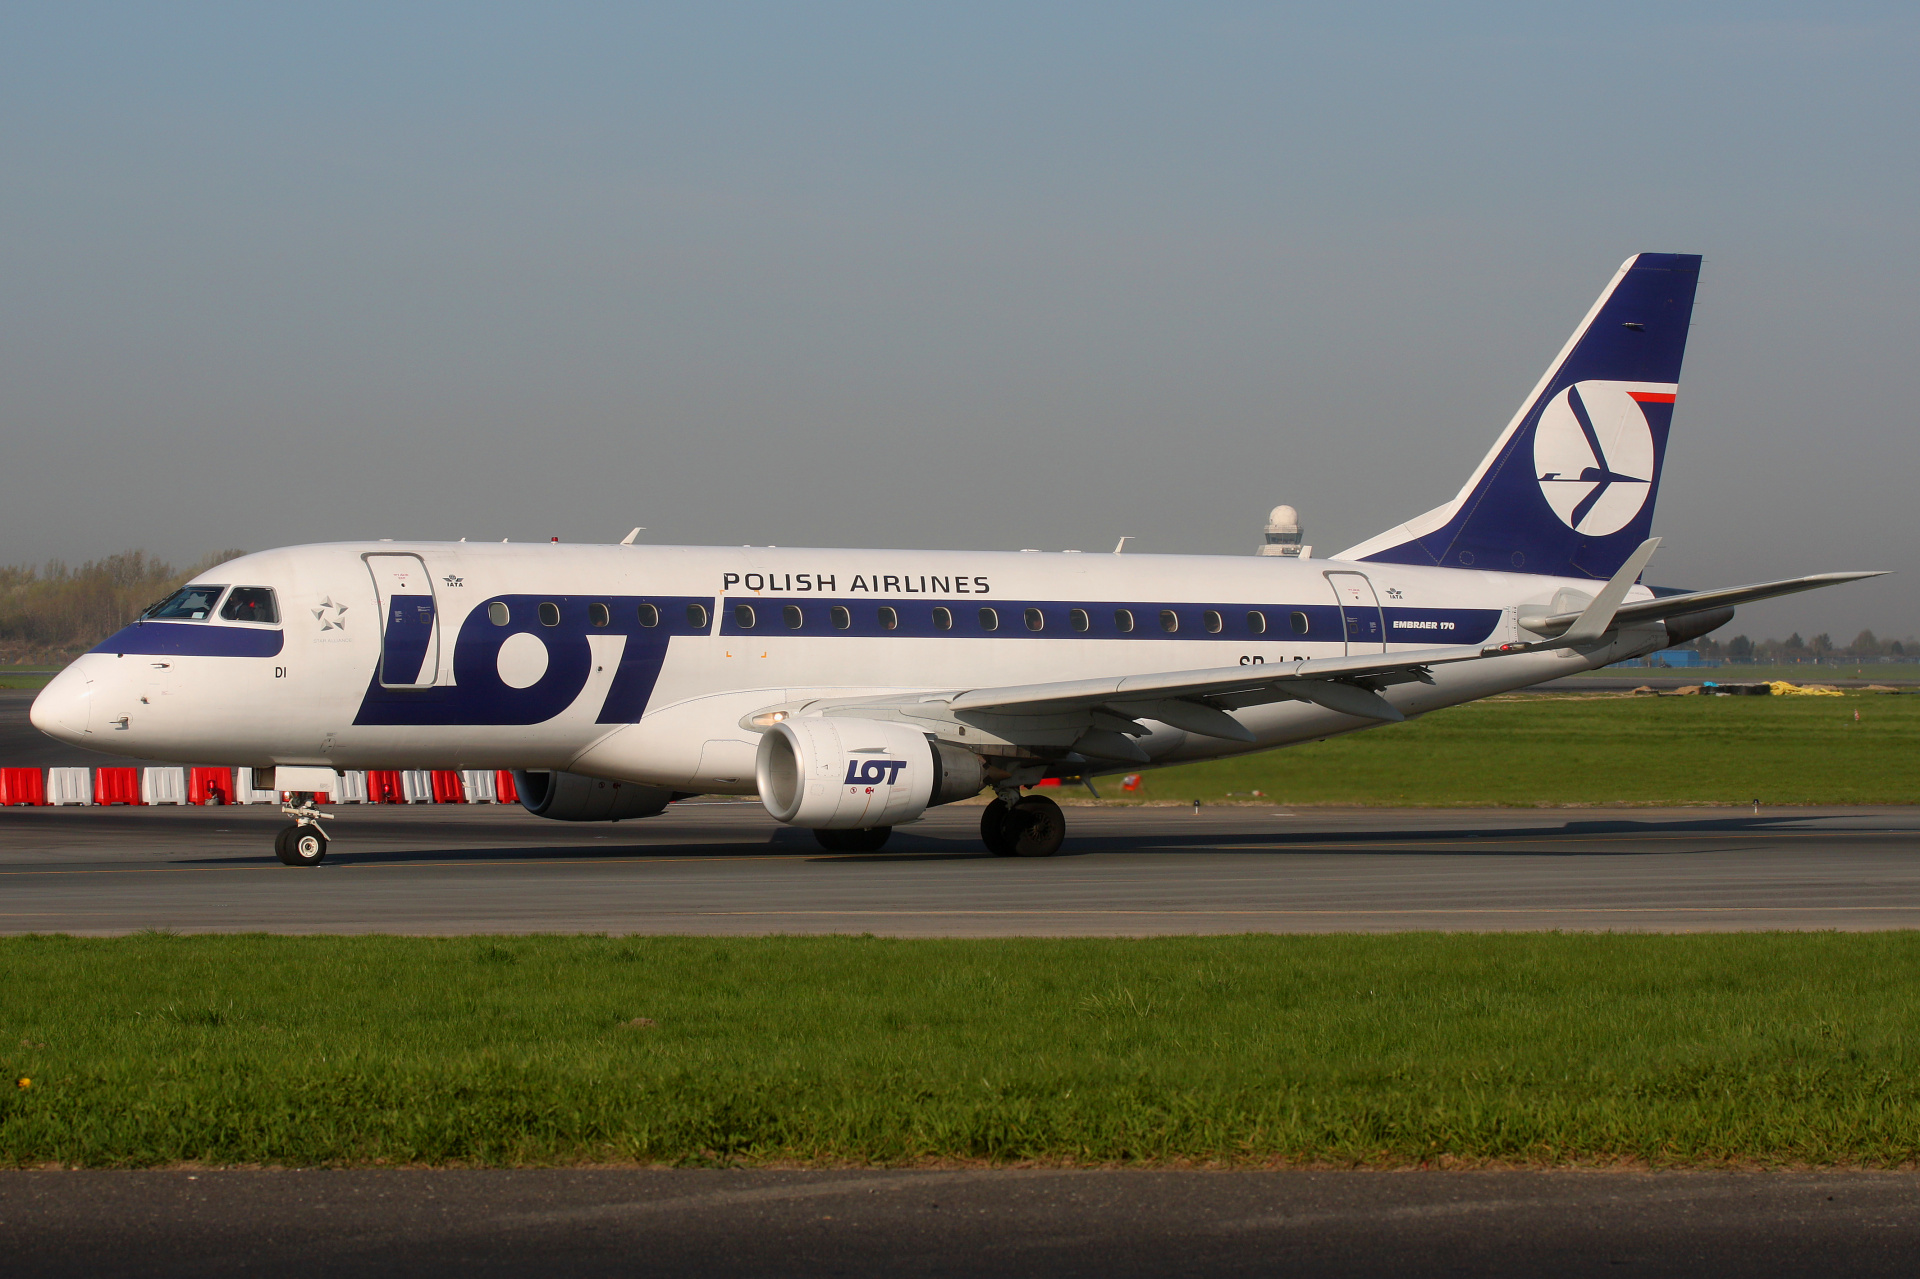 SP-LDI (Samoloty » Spotting na EPWA » Embraer E170 » Polskie Linie Lotnicze LOT)